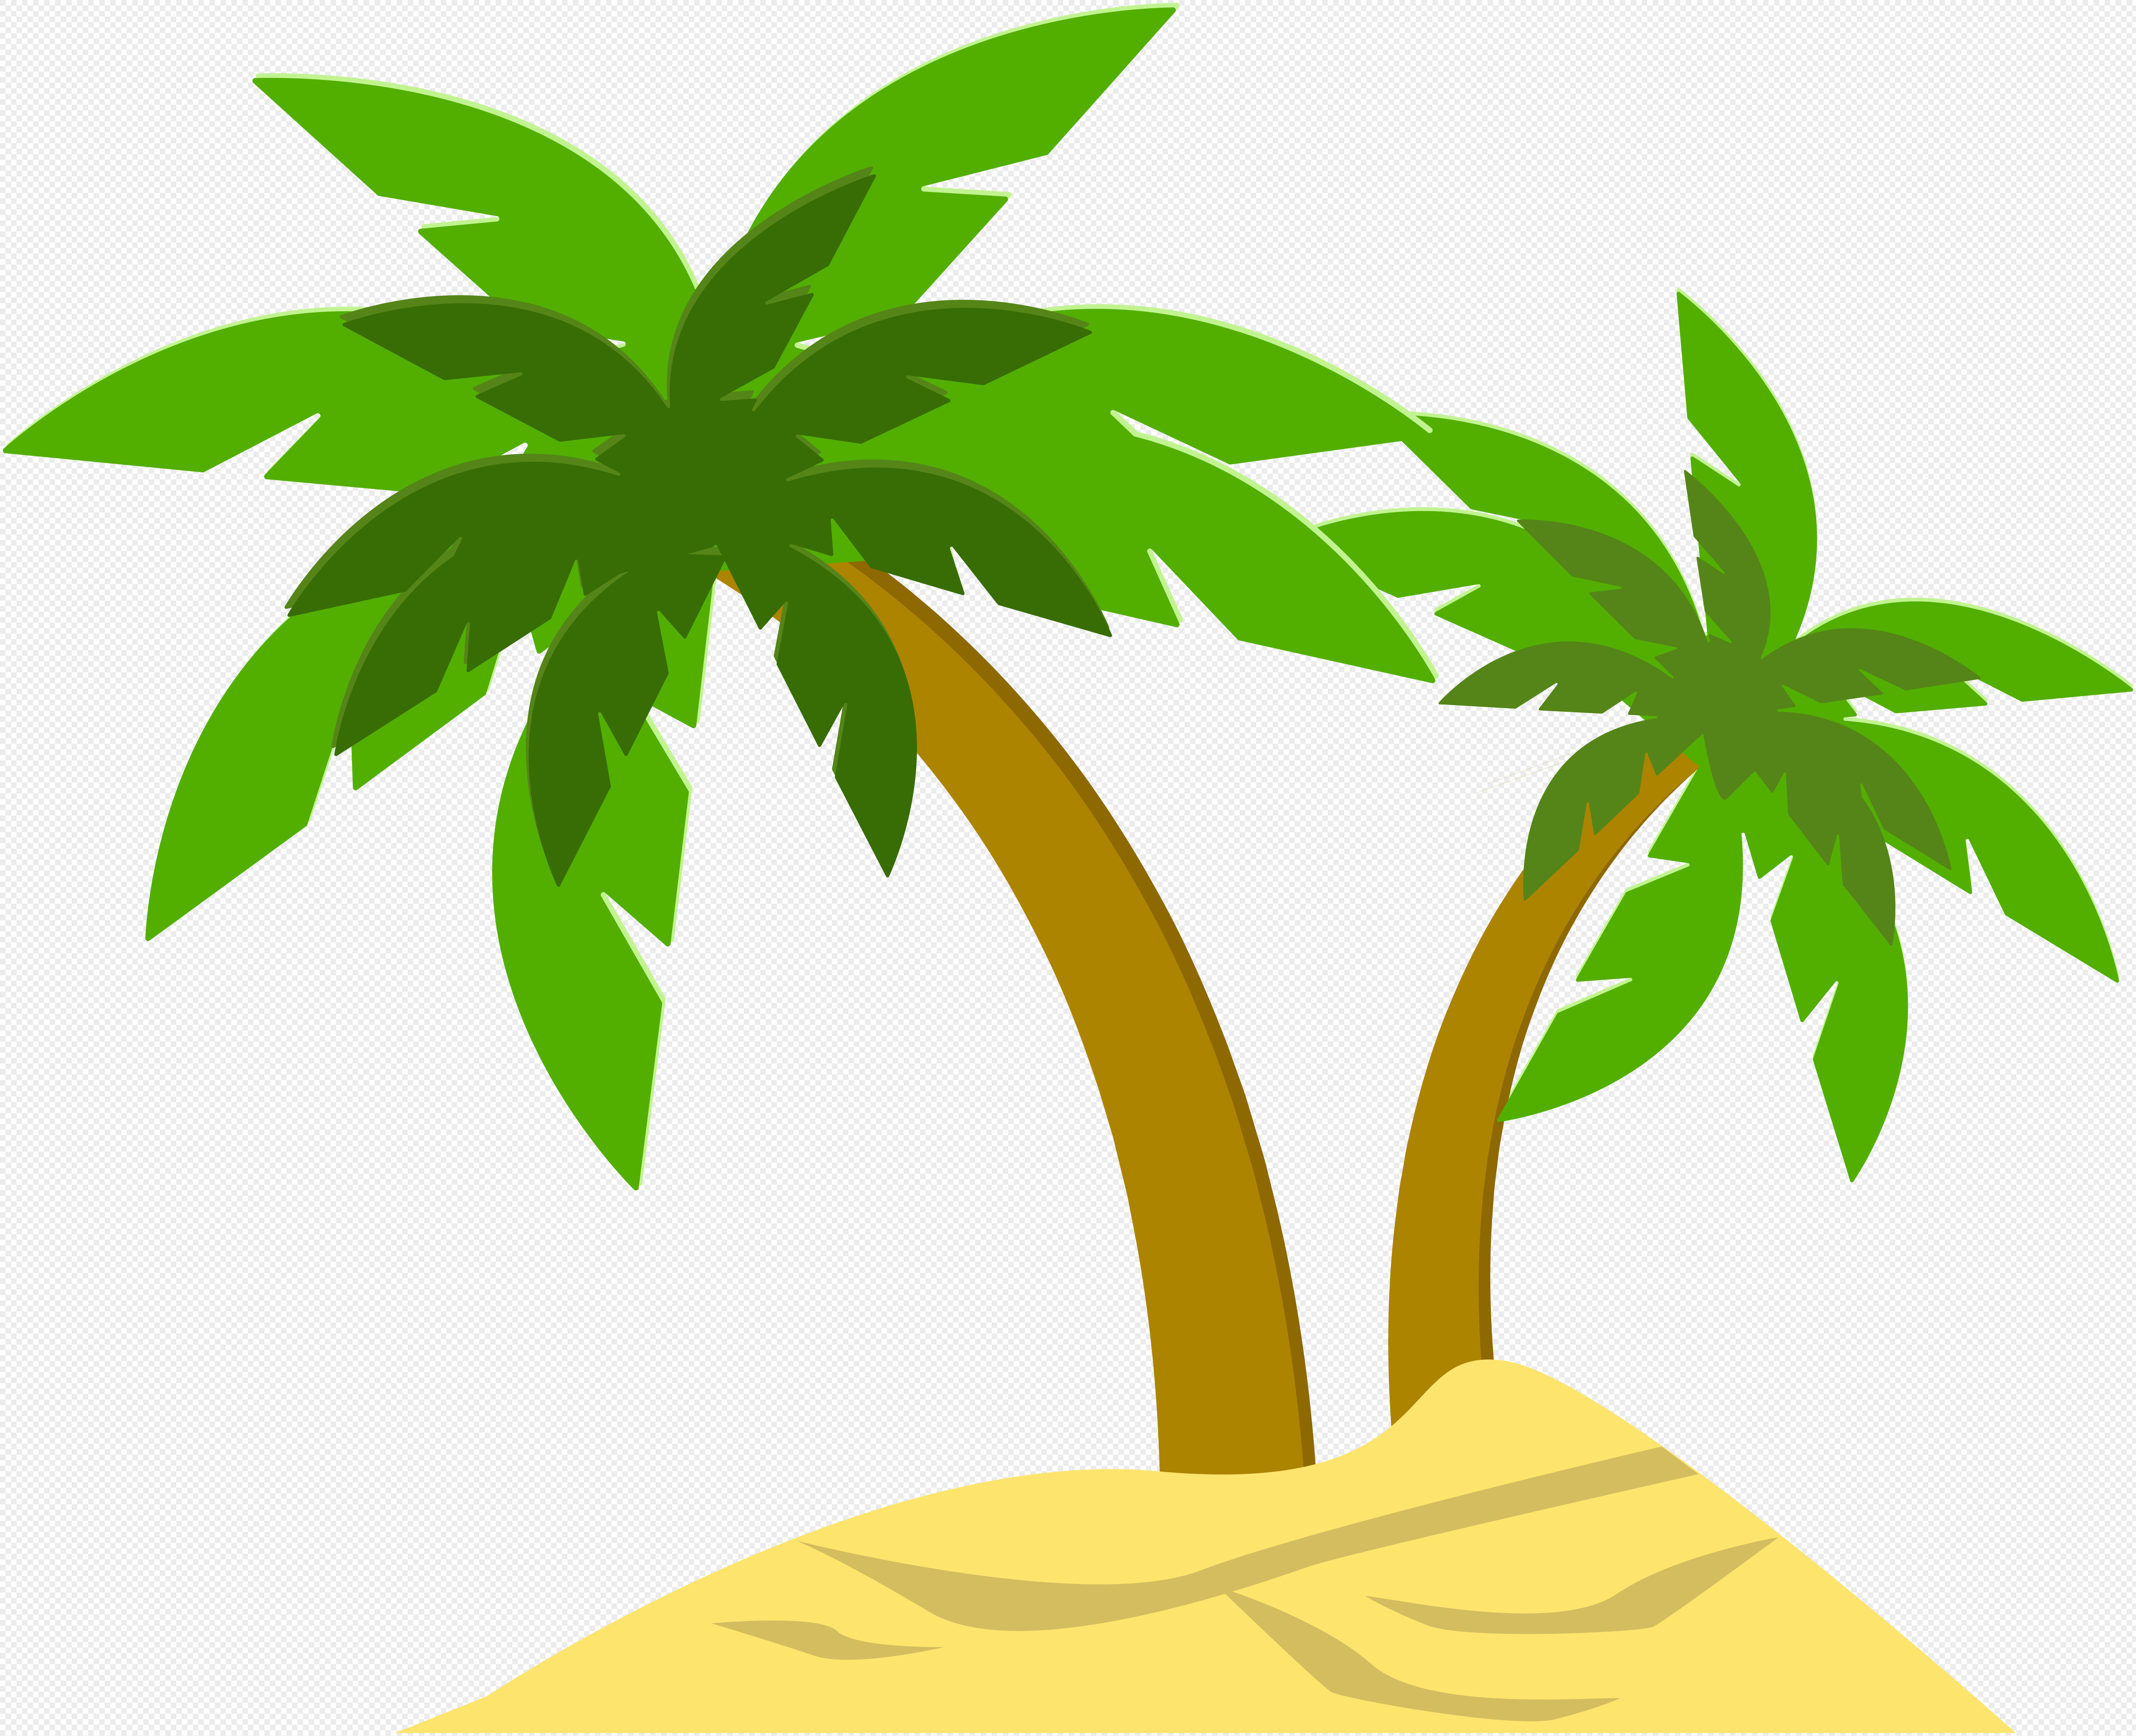  pohon  kelapa  kartun  PNG grafik gambar  unduh gratis Lovepik